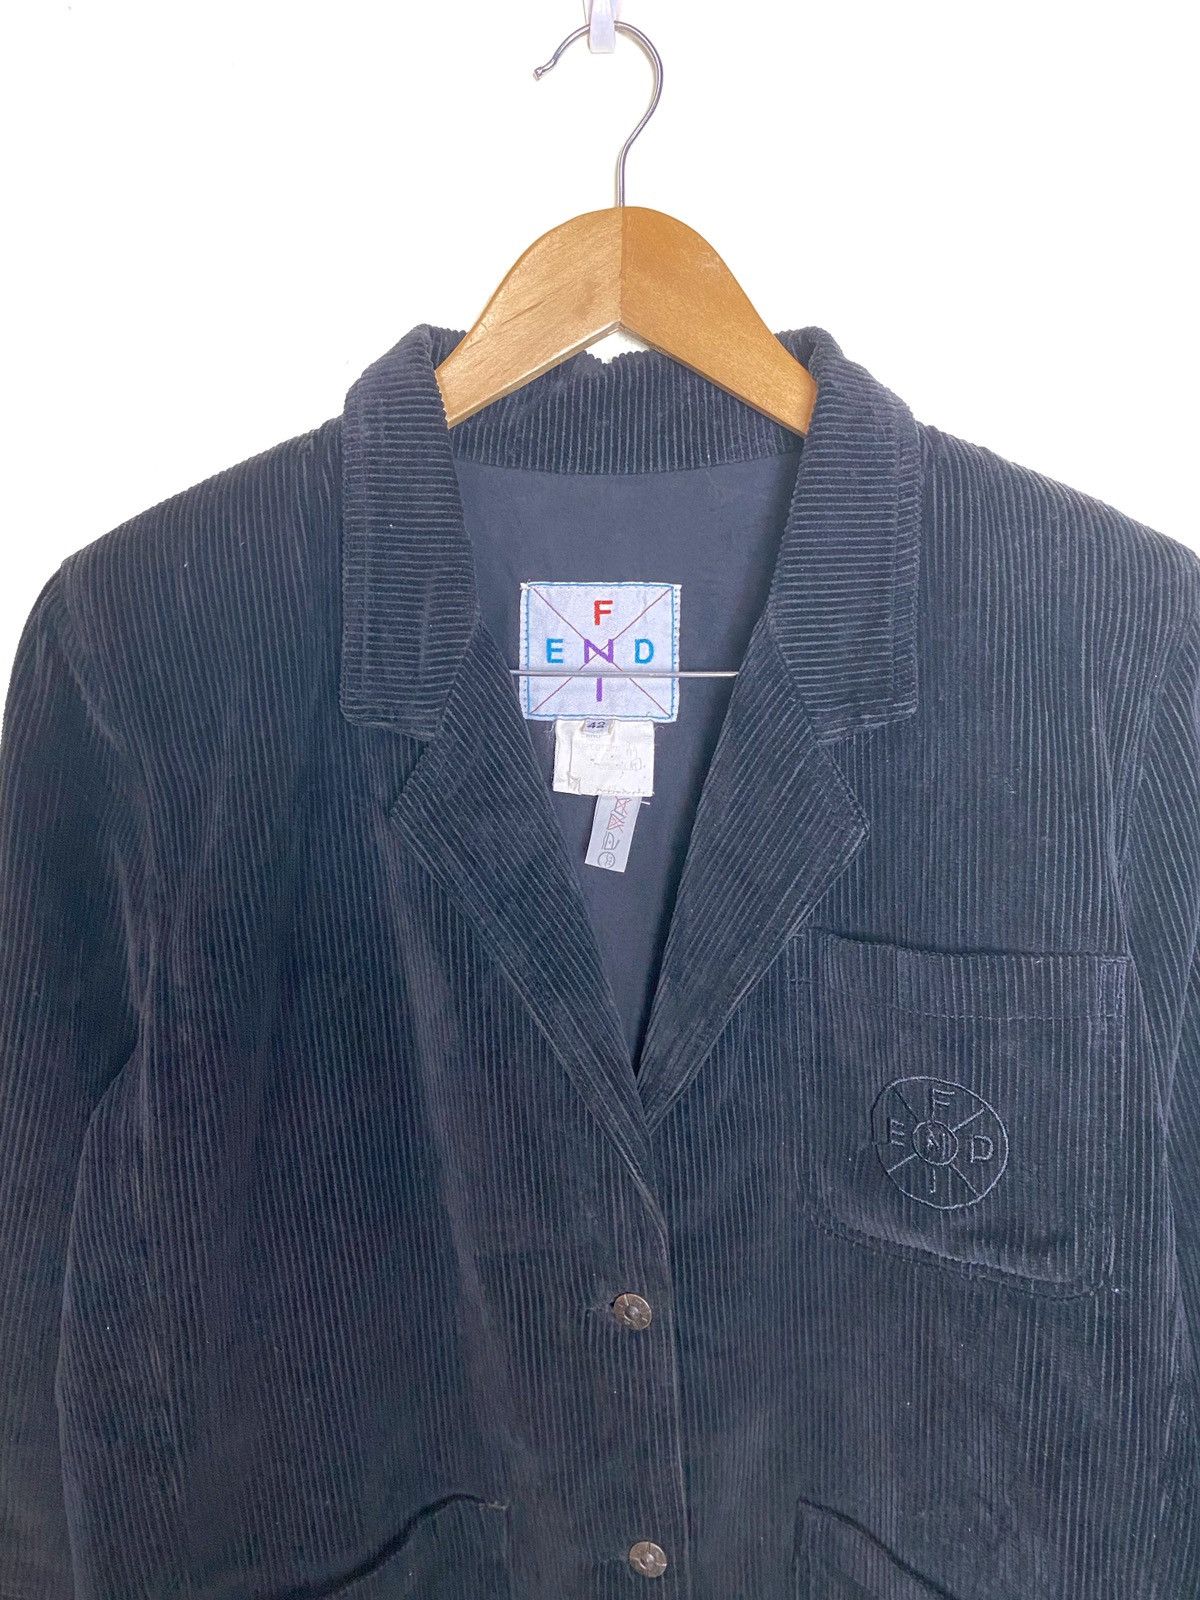 Vintage FENDI Corduroy Jacket Blazer - 2